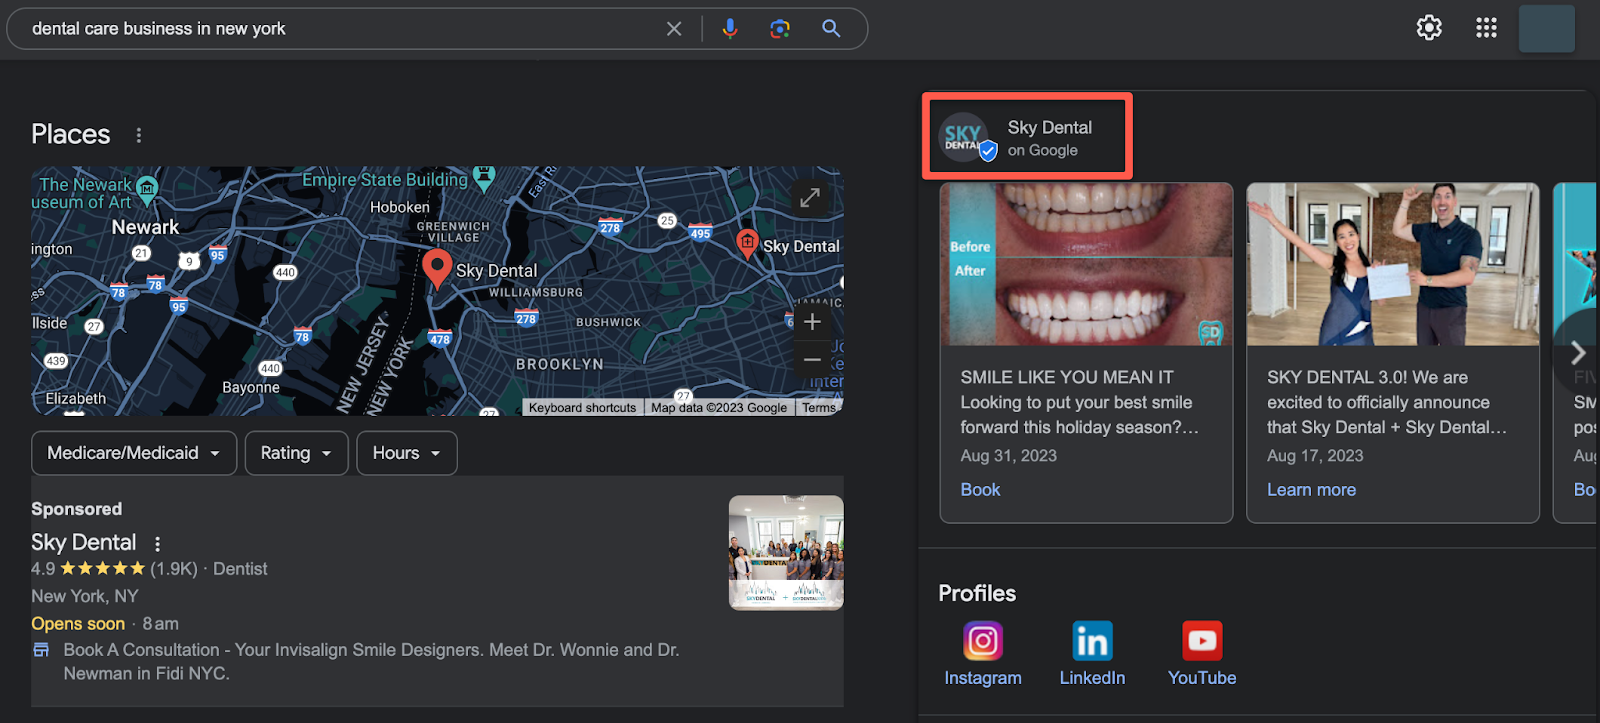 Sky Dental'in Google İşletme Profili